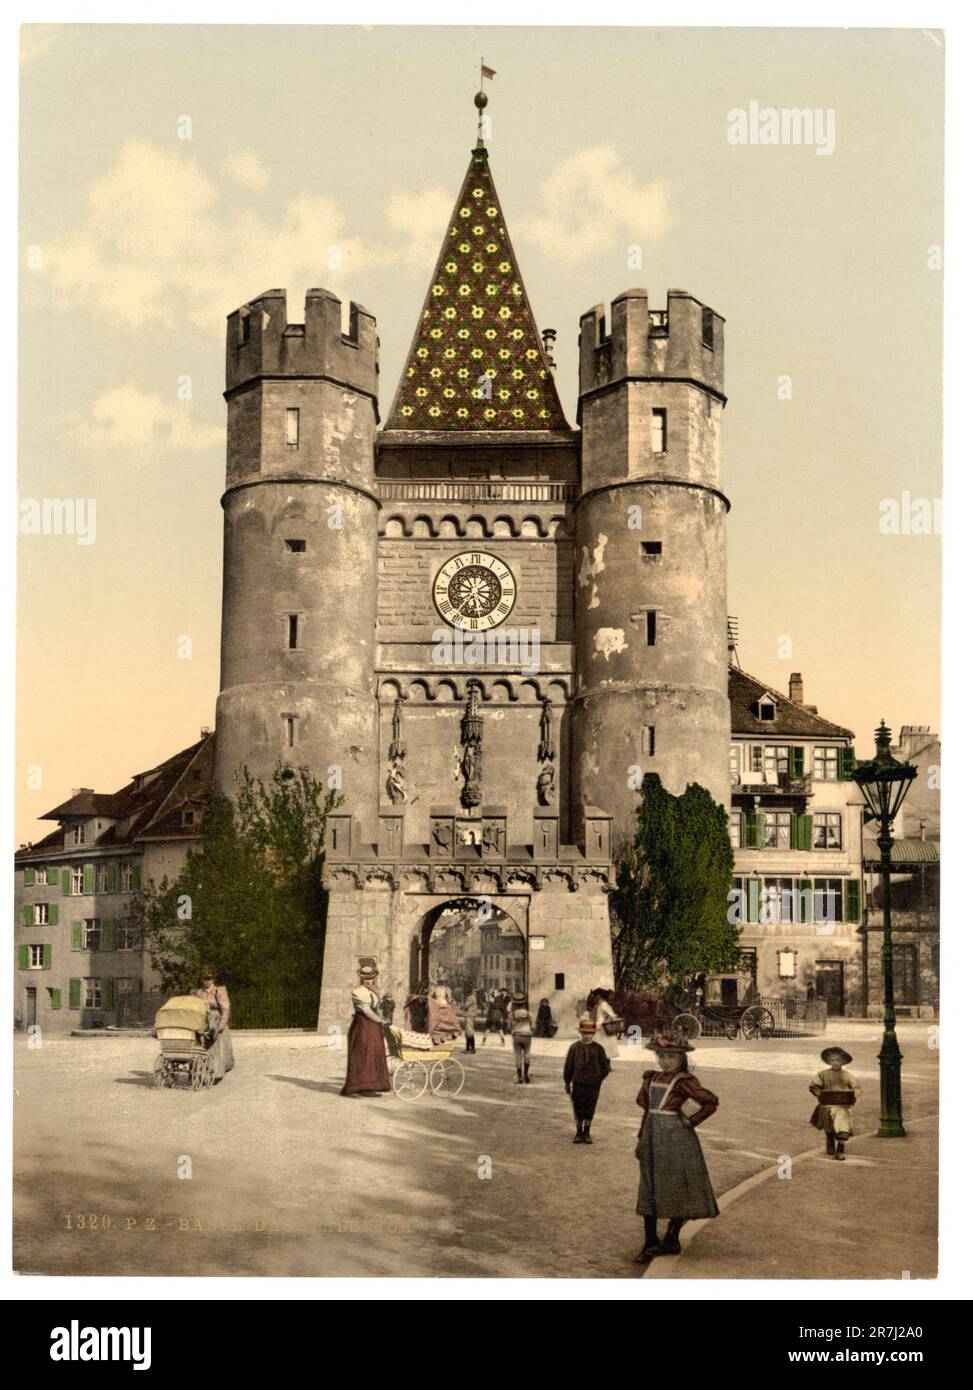 The Spalentor, Basel, Basel-Stadt, Switzerland 1890. Stock Photo